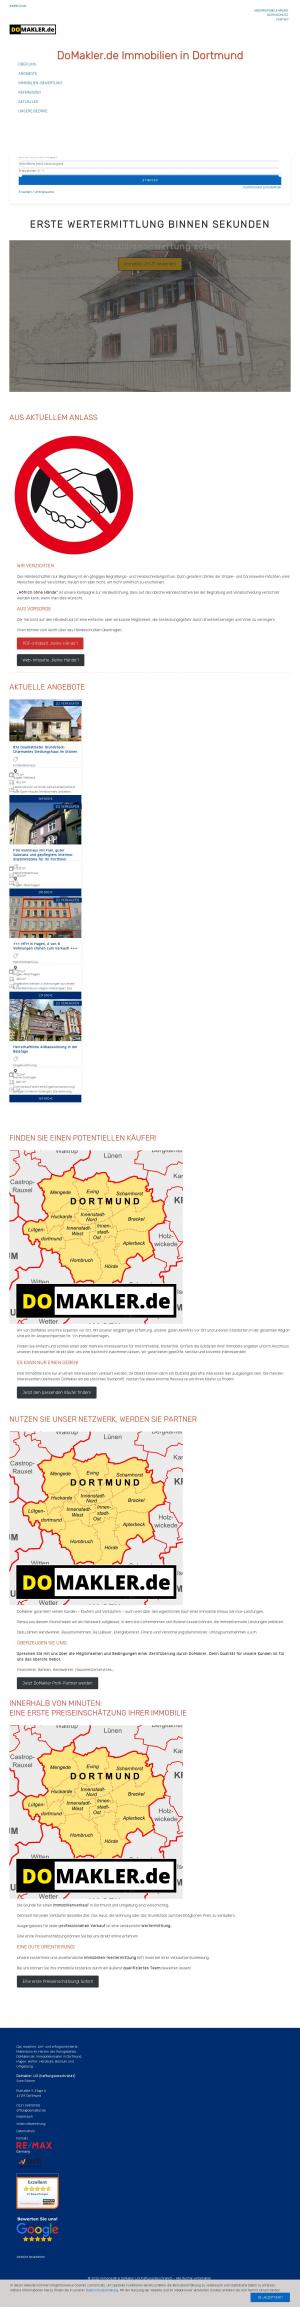 www.do-makler.de